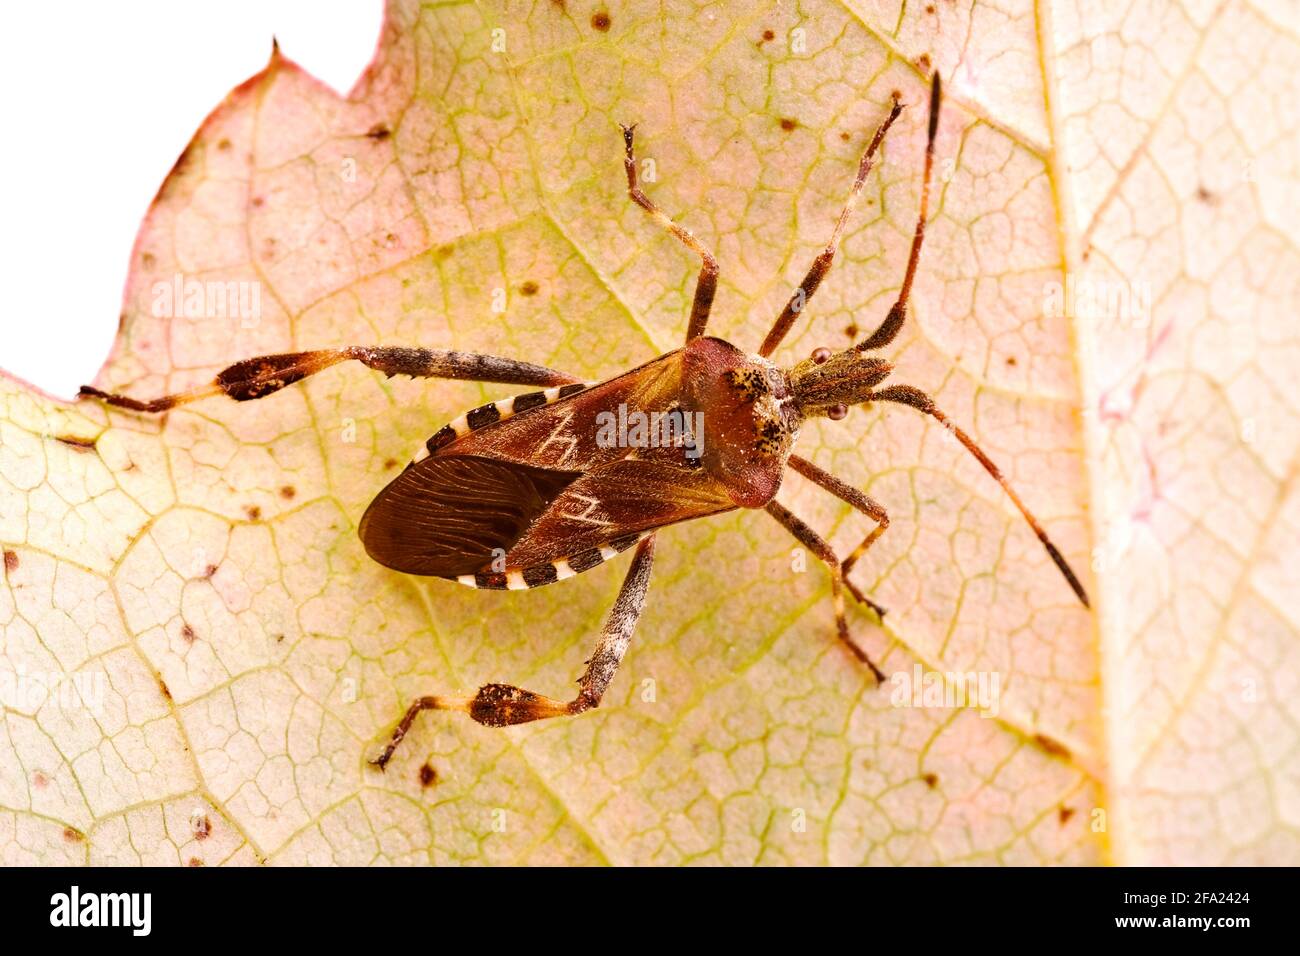 Western conifer seed bug (Leptoglossus occidentalis), sits on a leaf, Austria Stock Photo